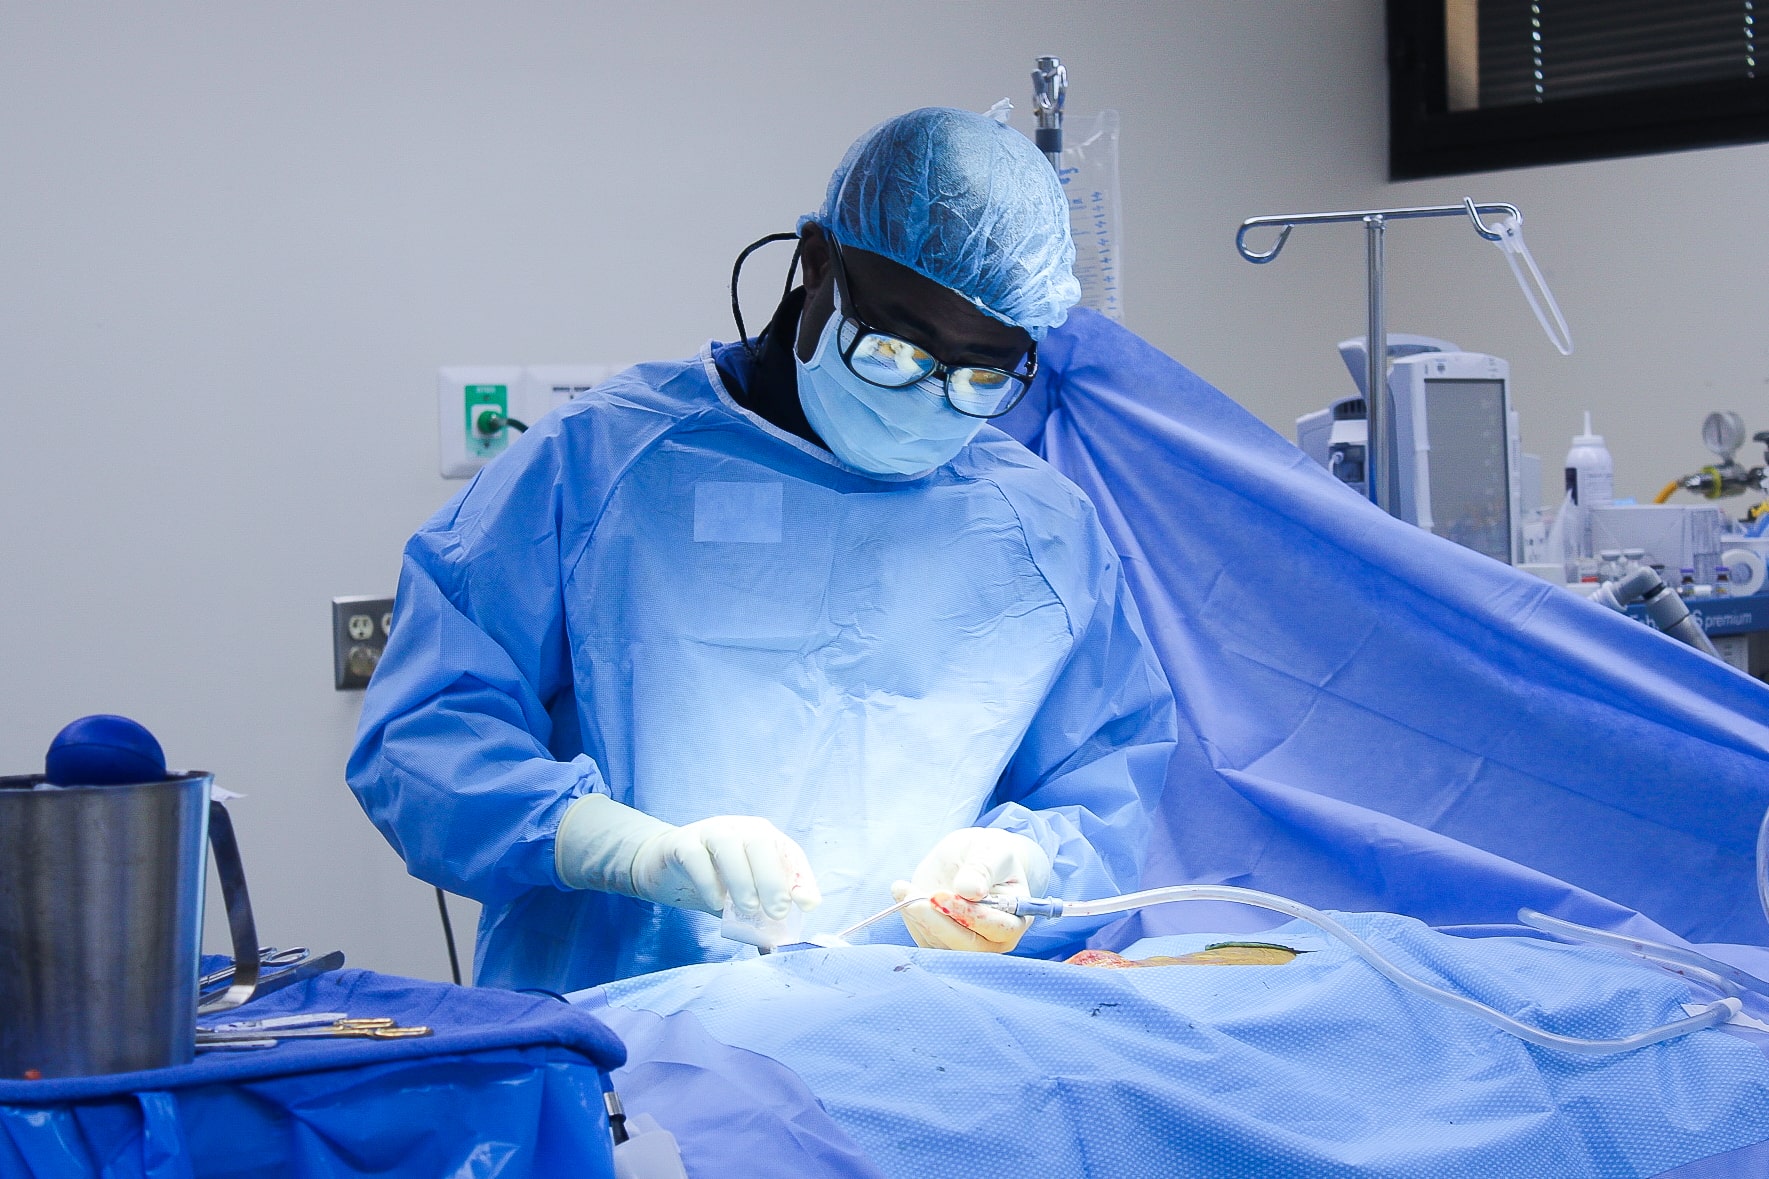 Dr. Frimpong performing an ambulatory surgery